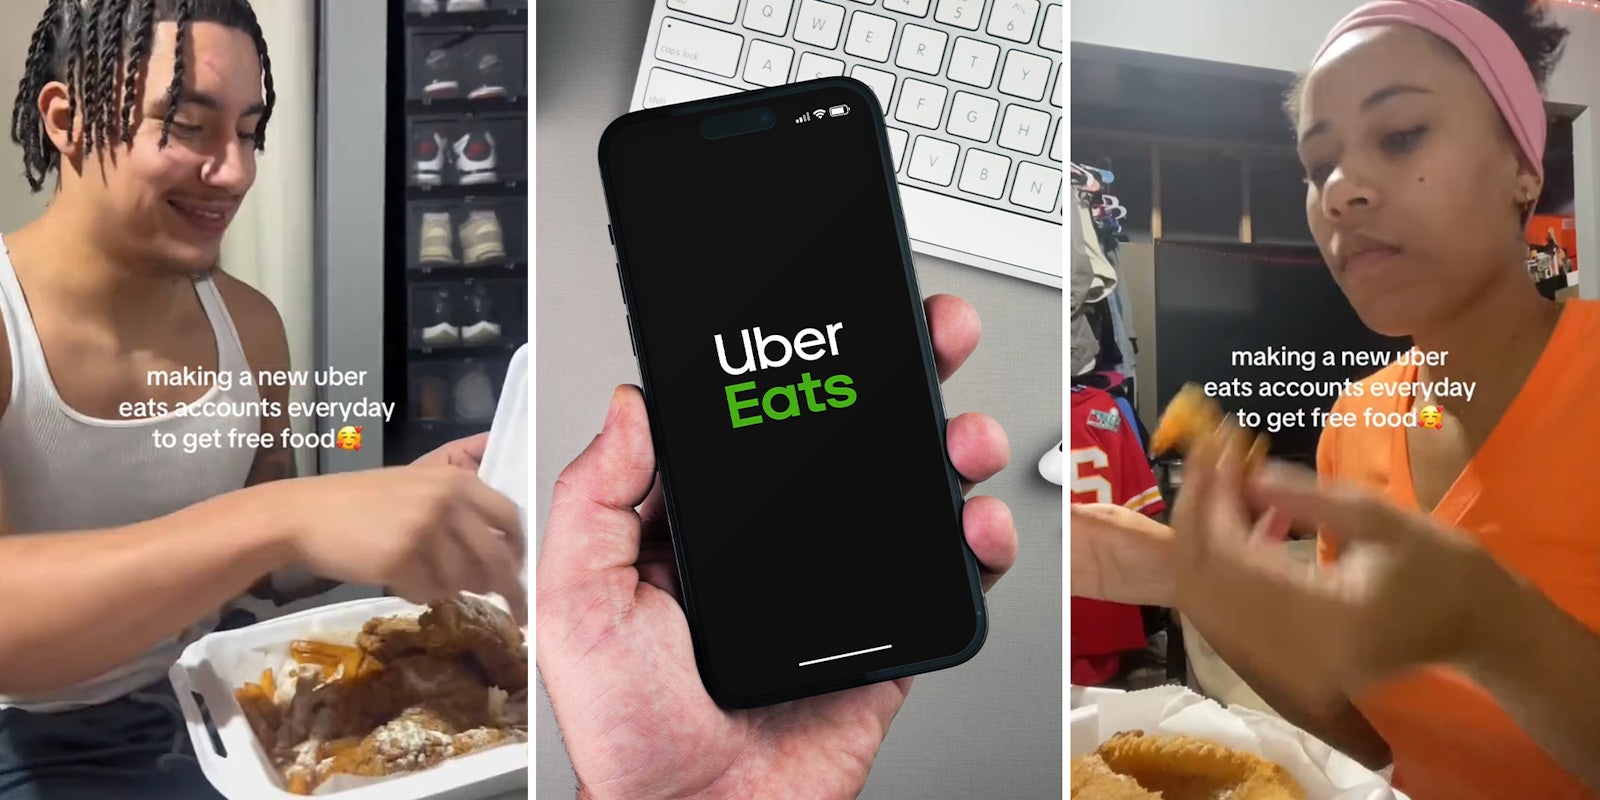 Uber Eats customer shares hack for always getting free food, starting debate